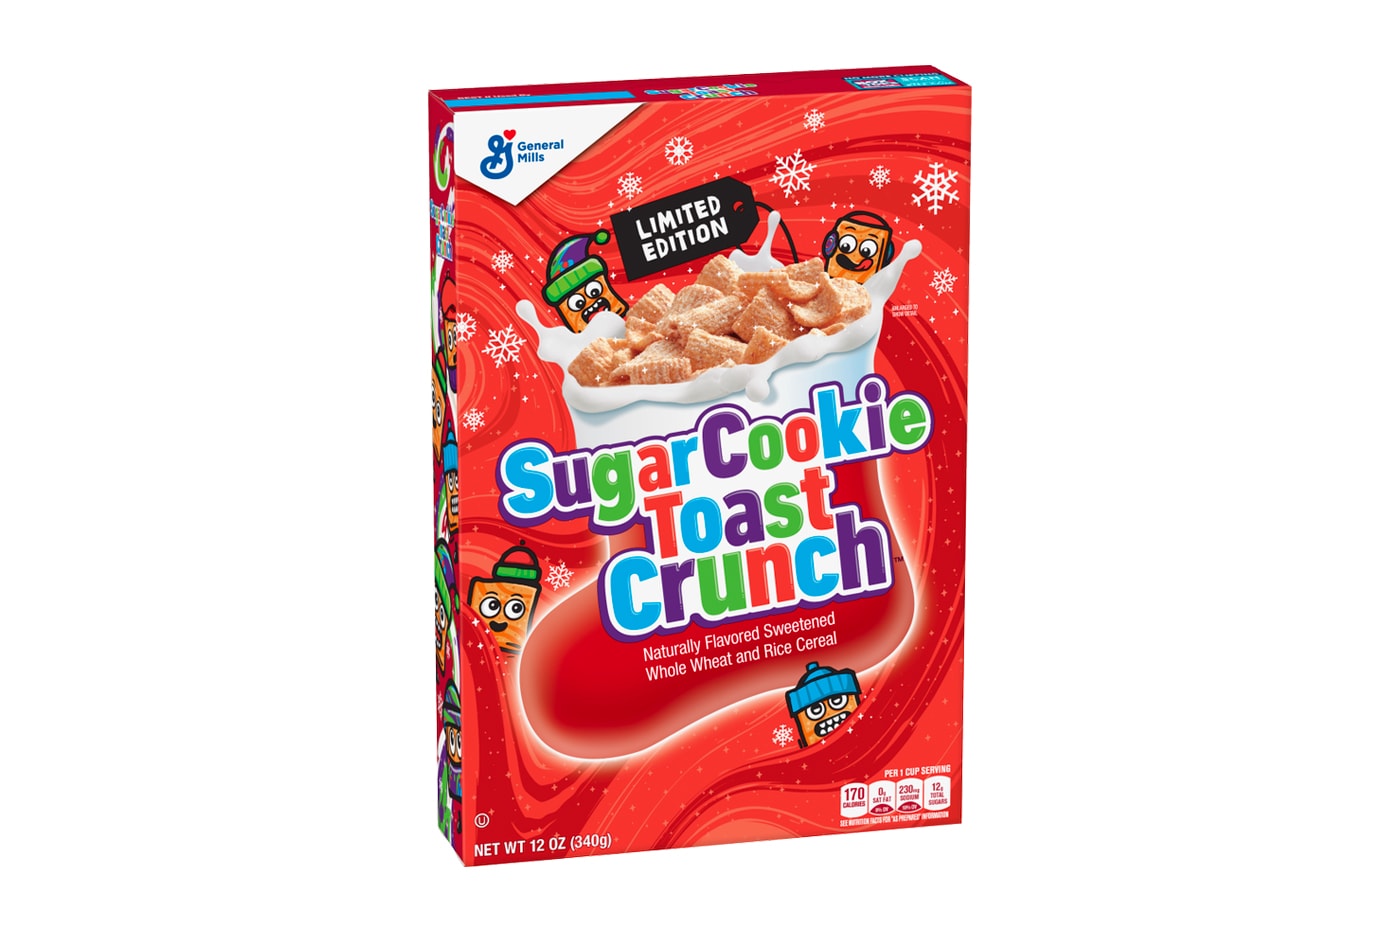 Sugar Cookie Toast Crunch Return 2021 Cinnamon Toast Crunch General Mills Christmas Holiday